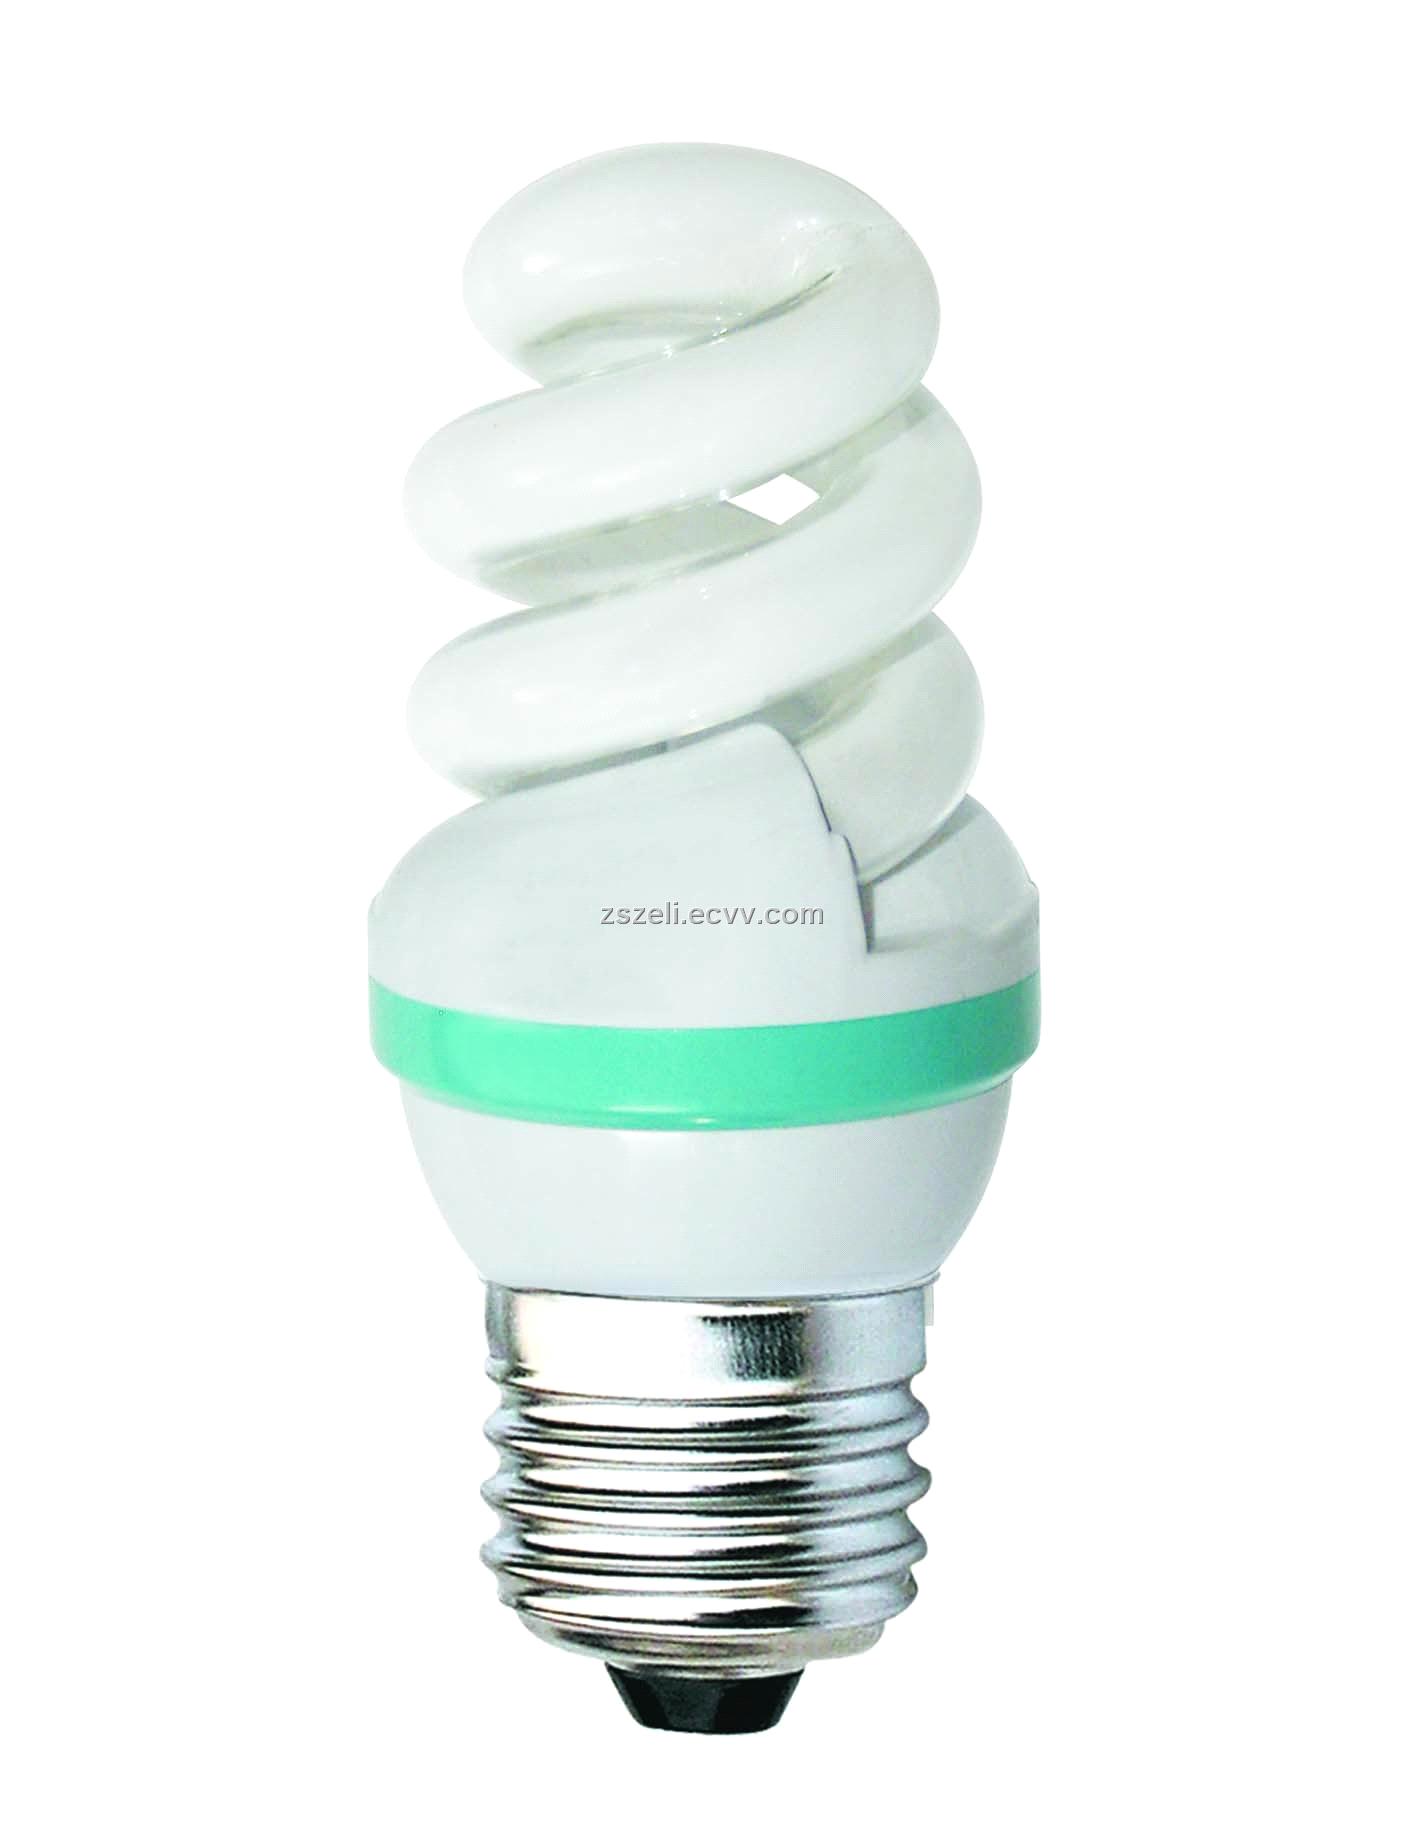 Full Spiral Light - China energy saving lamp, Zeli / Songfeng